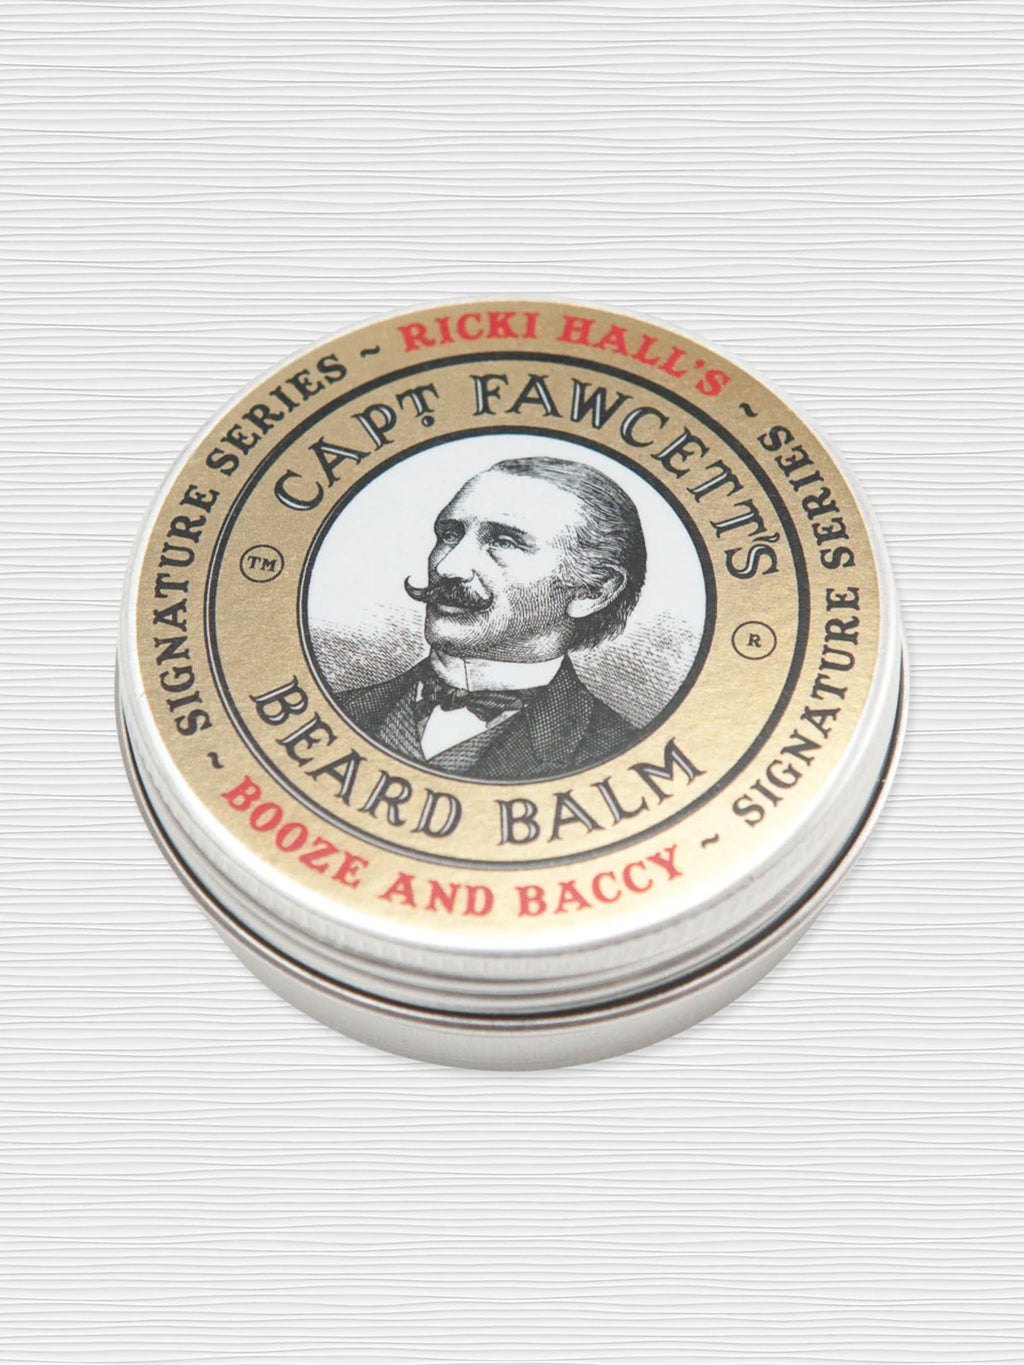 Captain Fawcett - Booze & Baccy Beard Balm